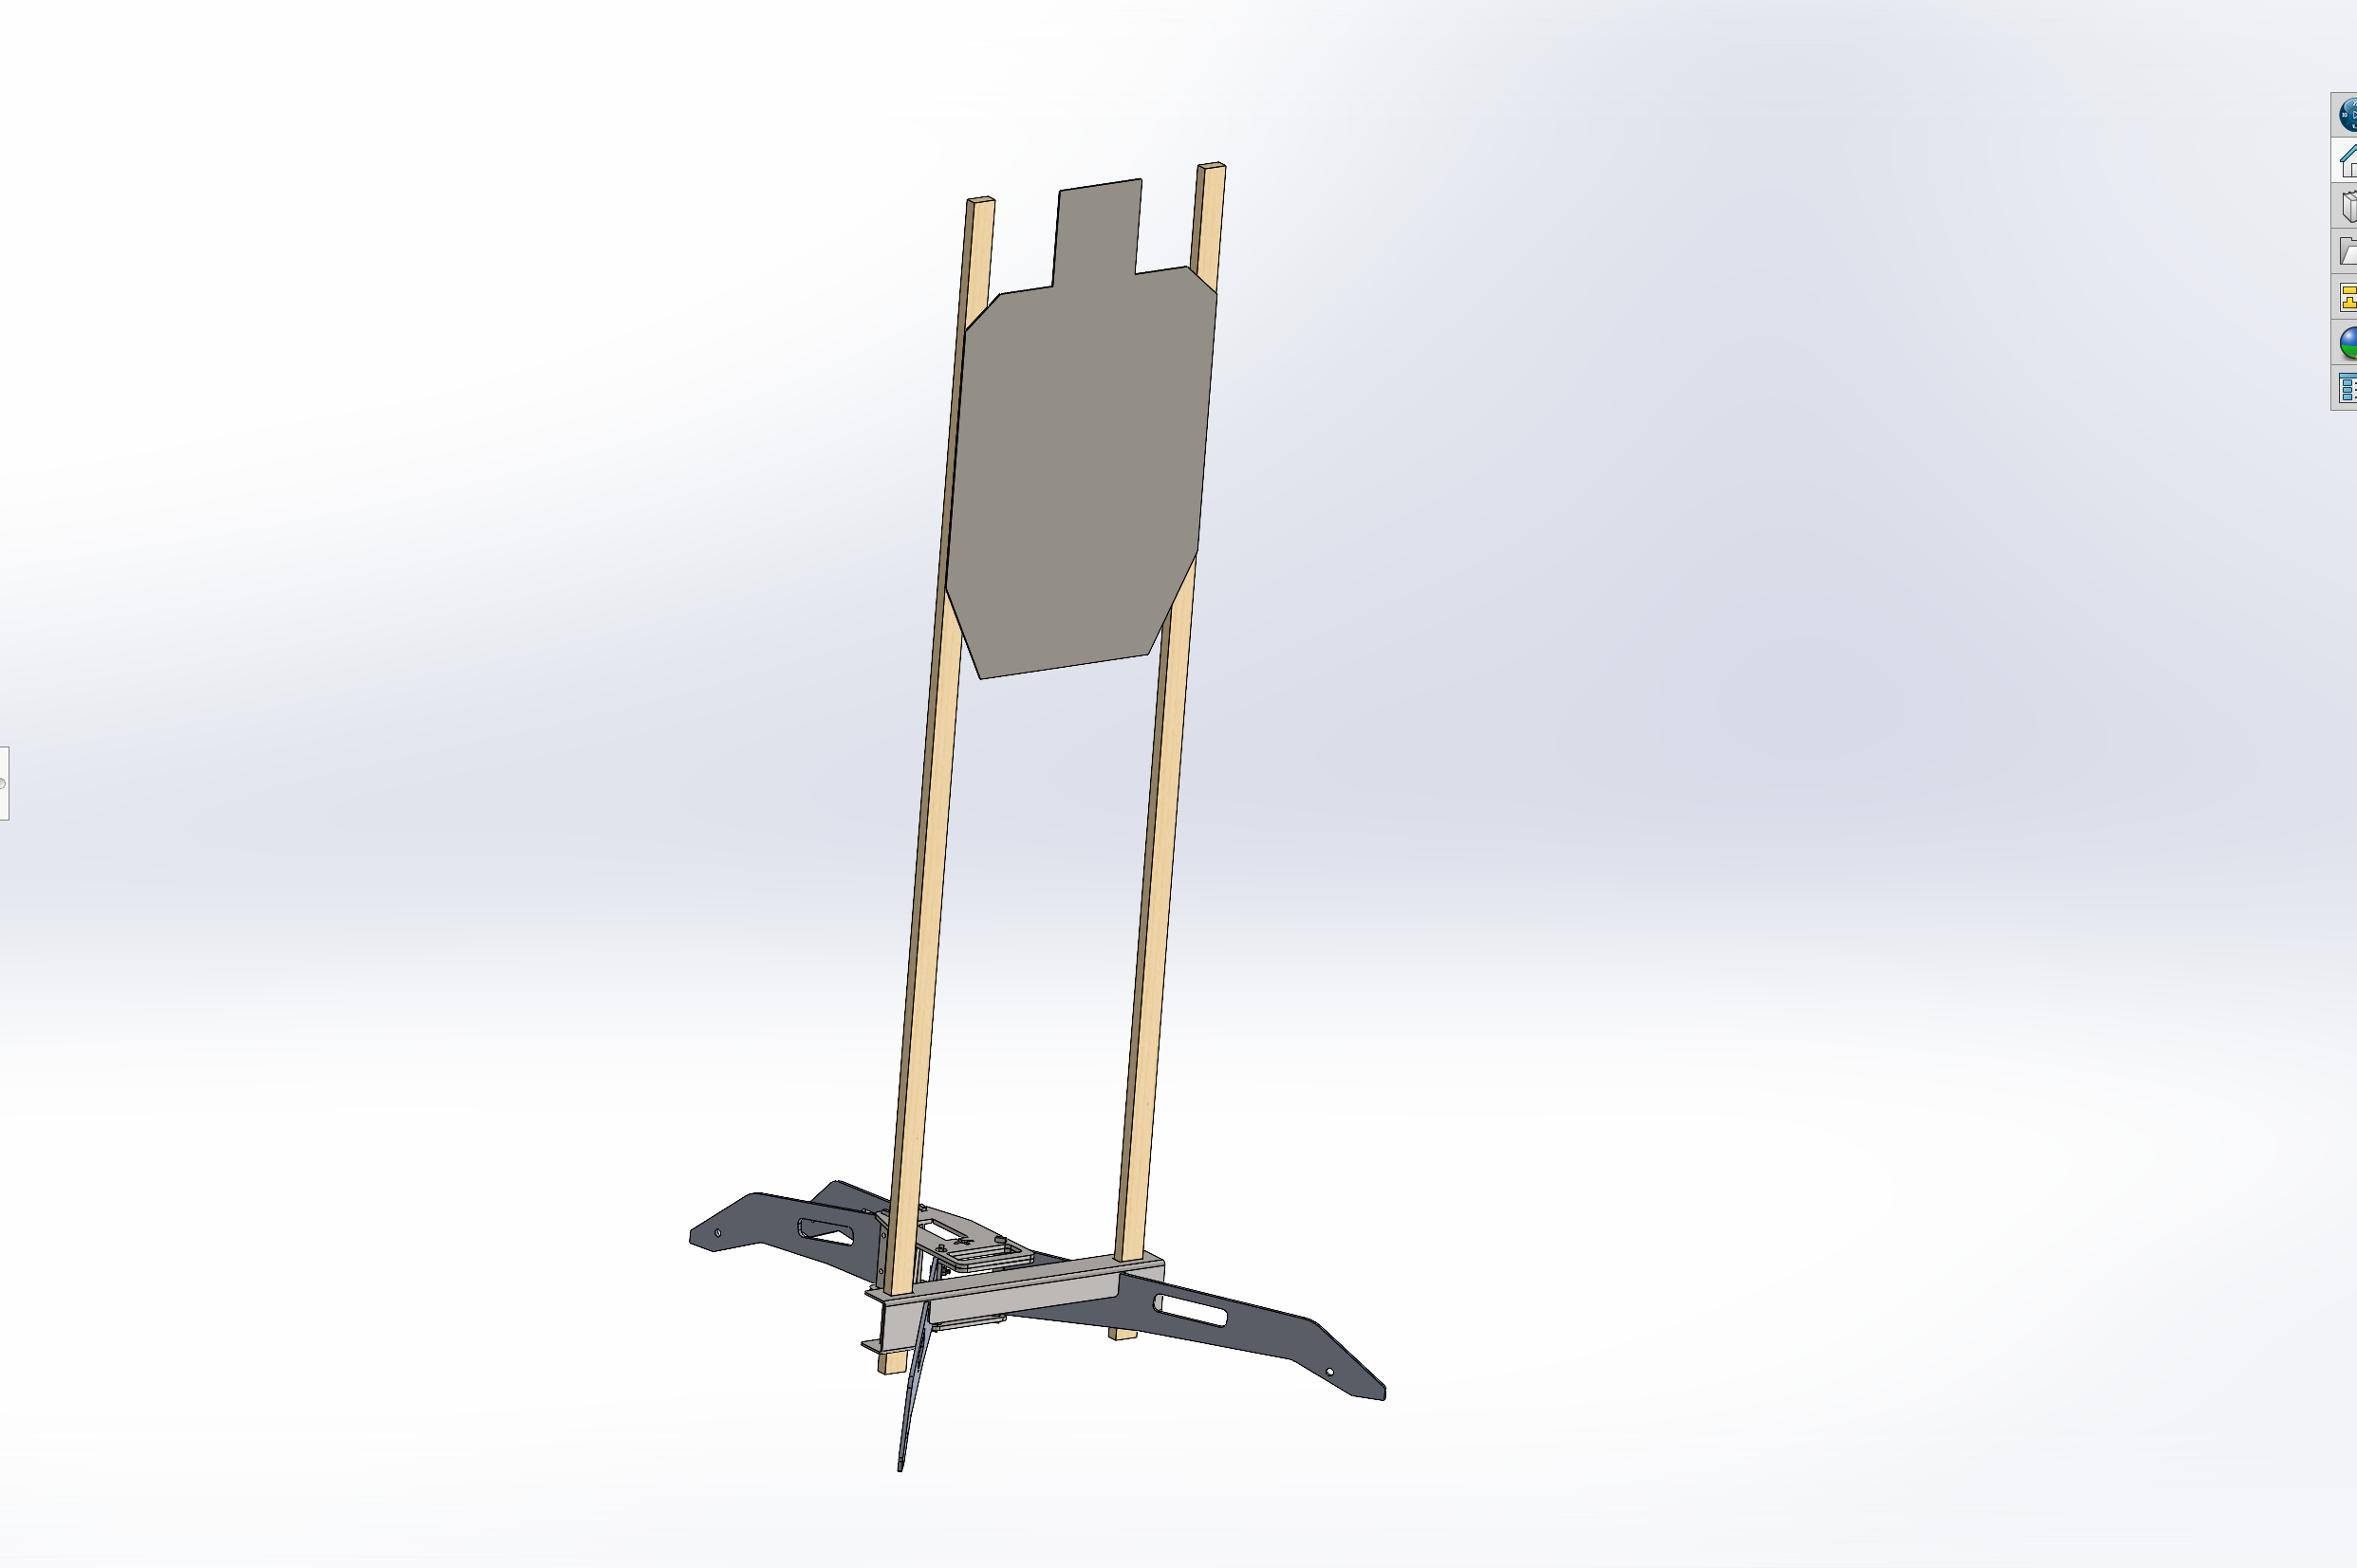 4 Leg Folding Target Stand add on Paper Target Holder kit